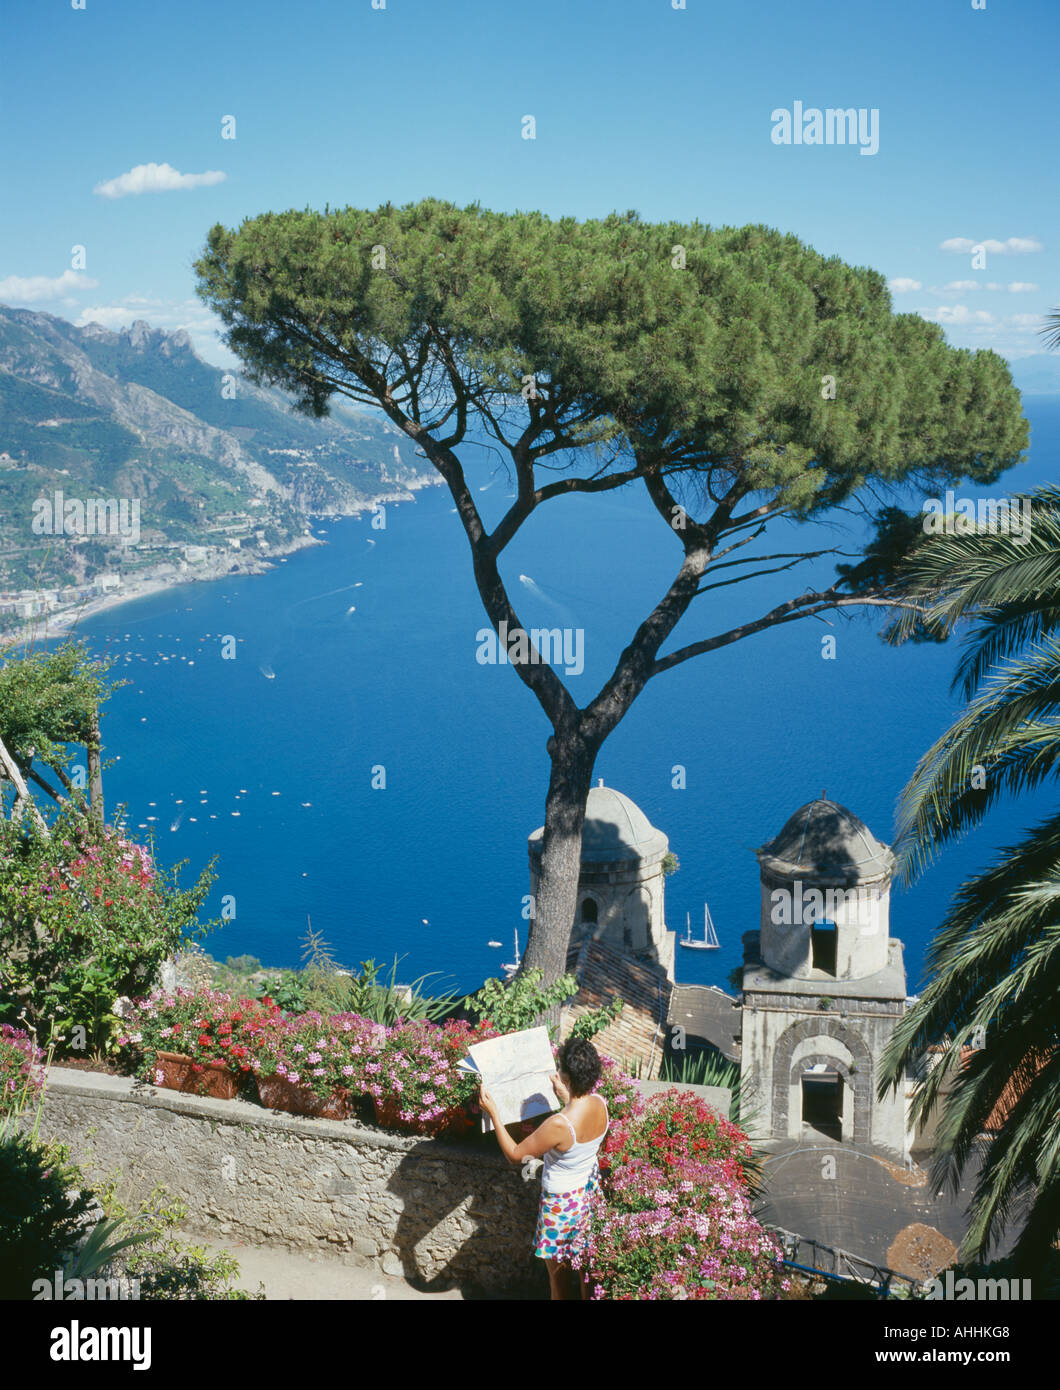 Italien Kampanien Ravello Amalfi Kuste Villa Rufolo Blick Vom Garten Auf Maiori Salerno Frau Liest Karte Neben Baum Stockfotografie Alamy